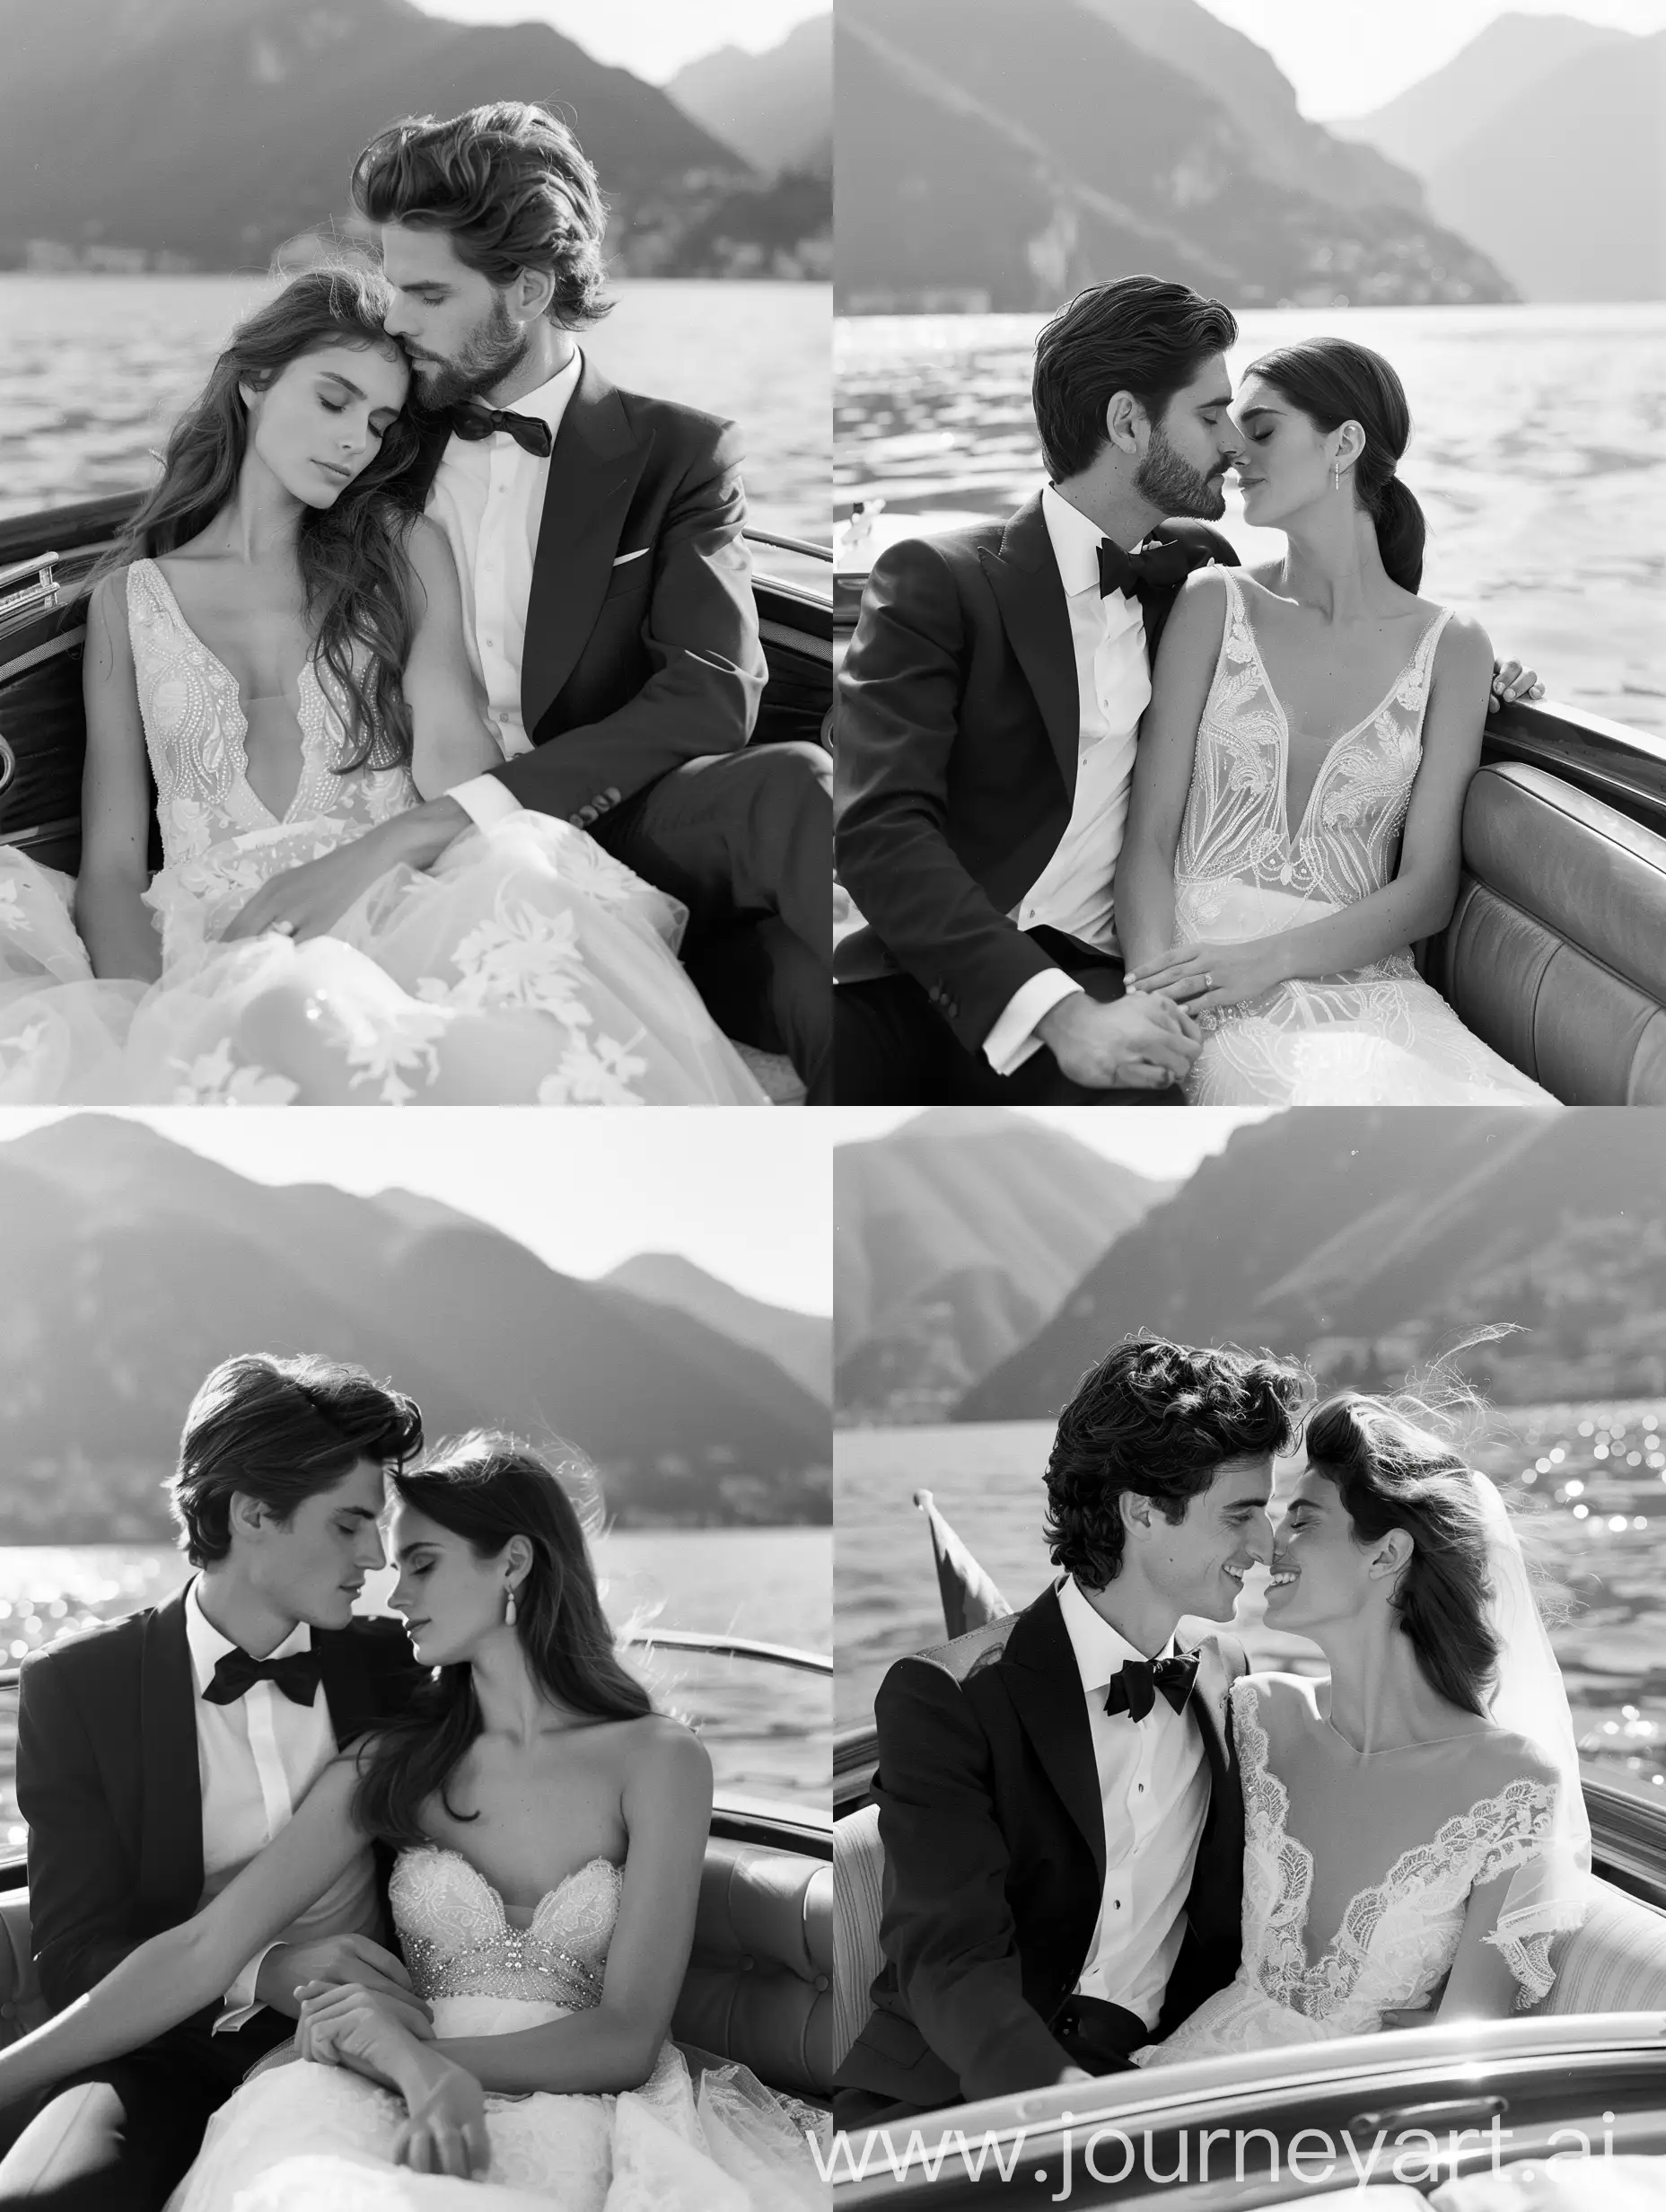 Editorial wedding photoshoot on lake como on boat using kodak portra black and white with 35mm film